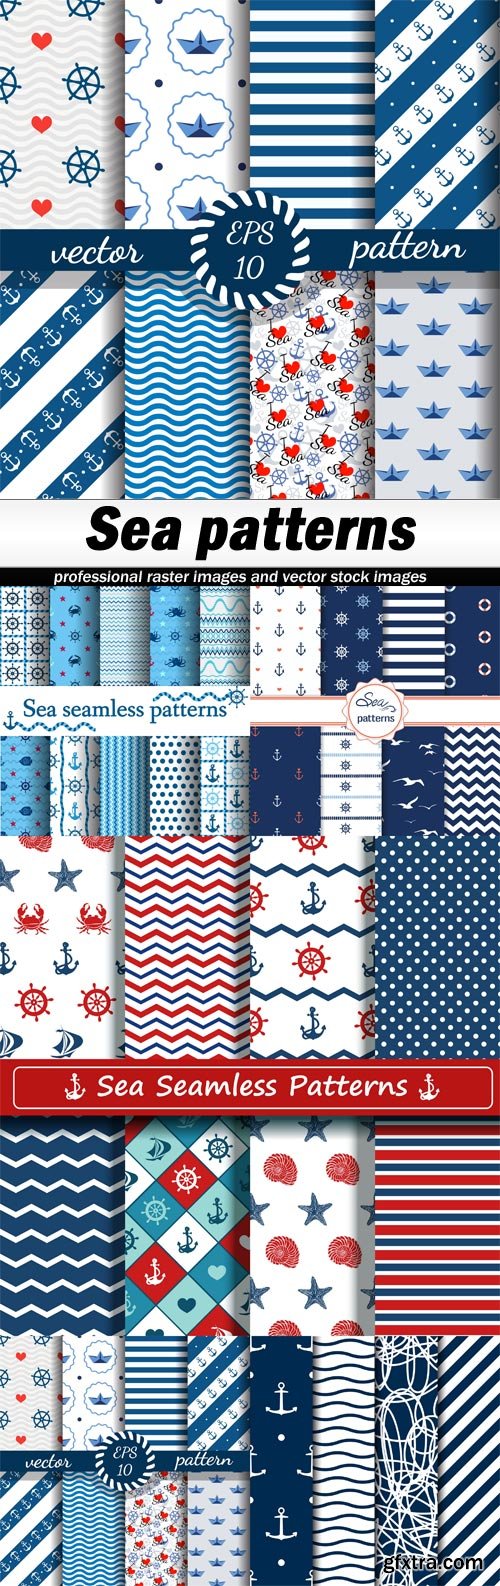 Sea patterns-5xEPS